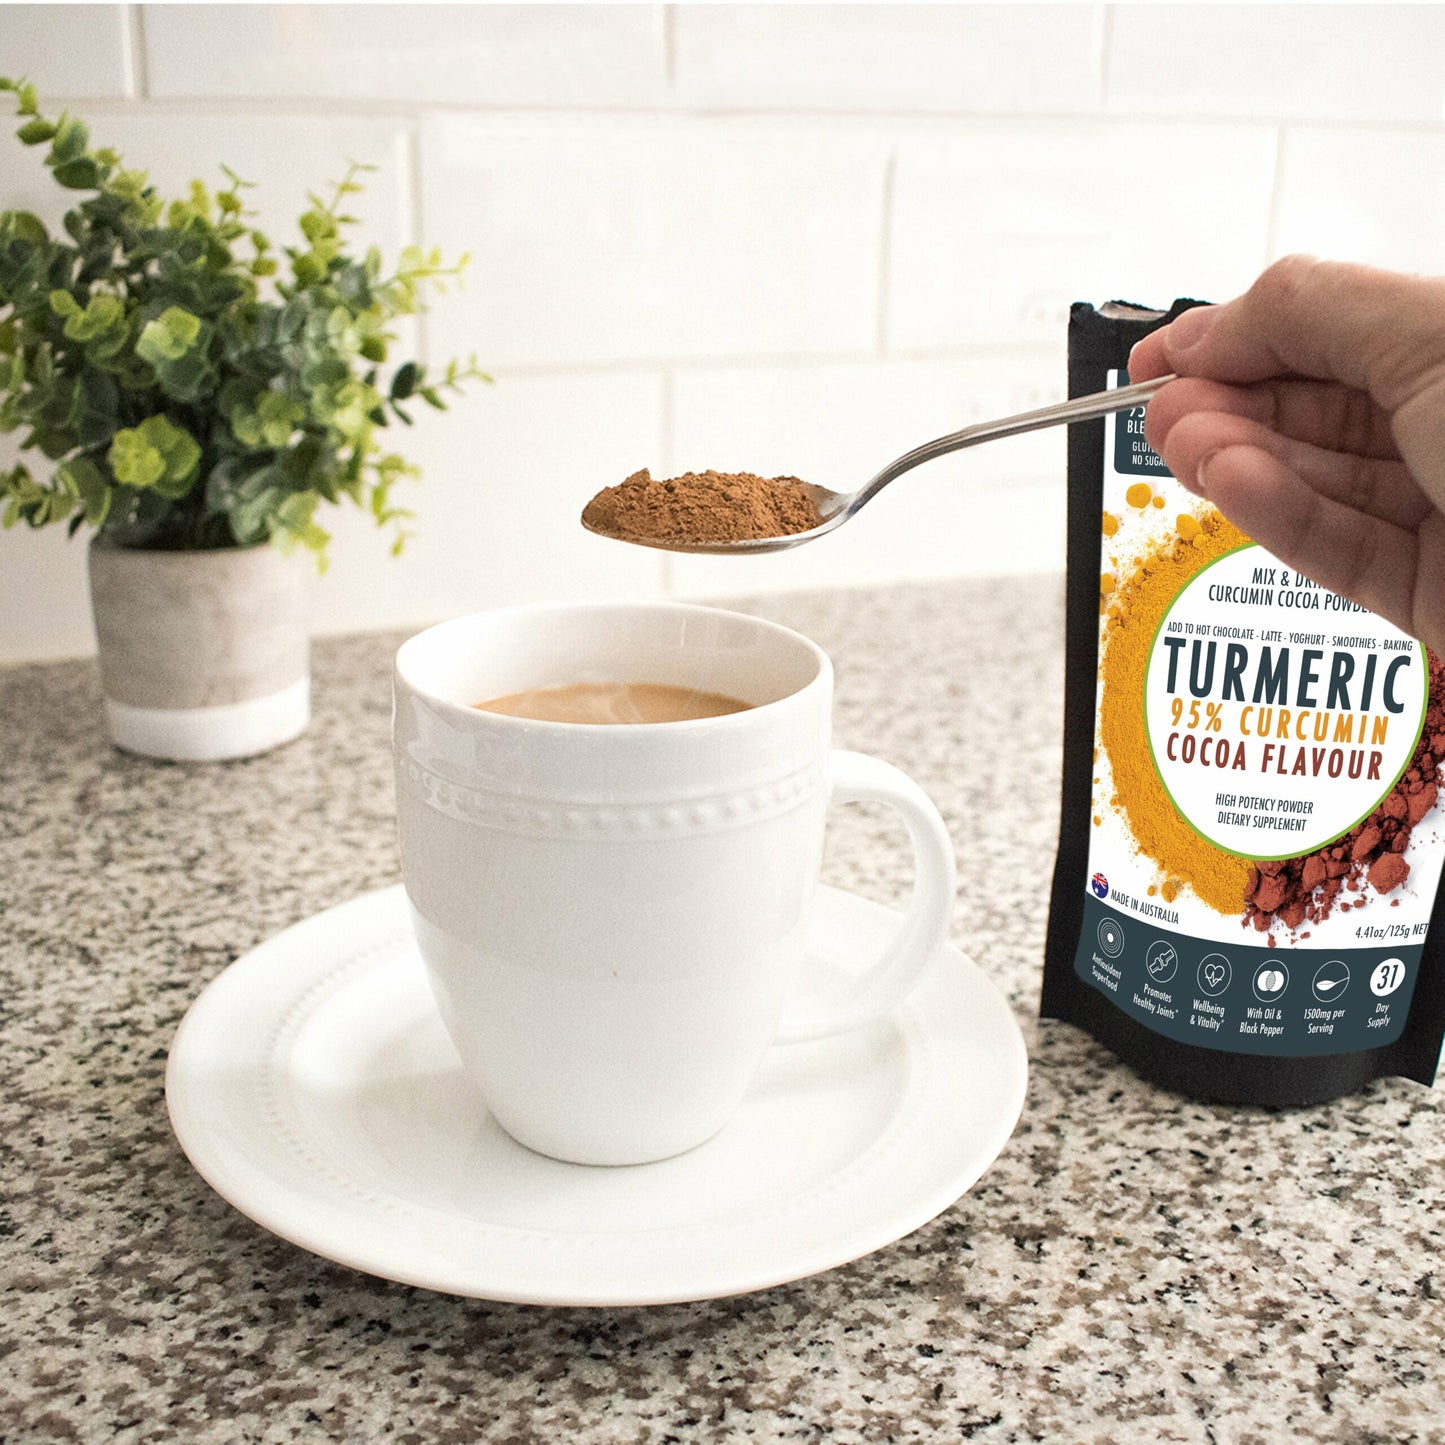 Antique White Turmeric 95%  Curcumin Extract w/ Cocoa Flavour - Pure & Organic - 1500mg Turmeric Powder With Black Pepper